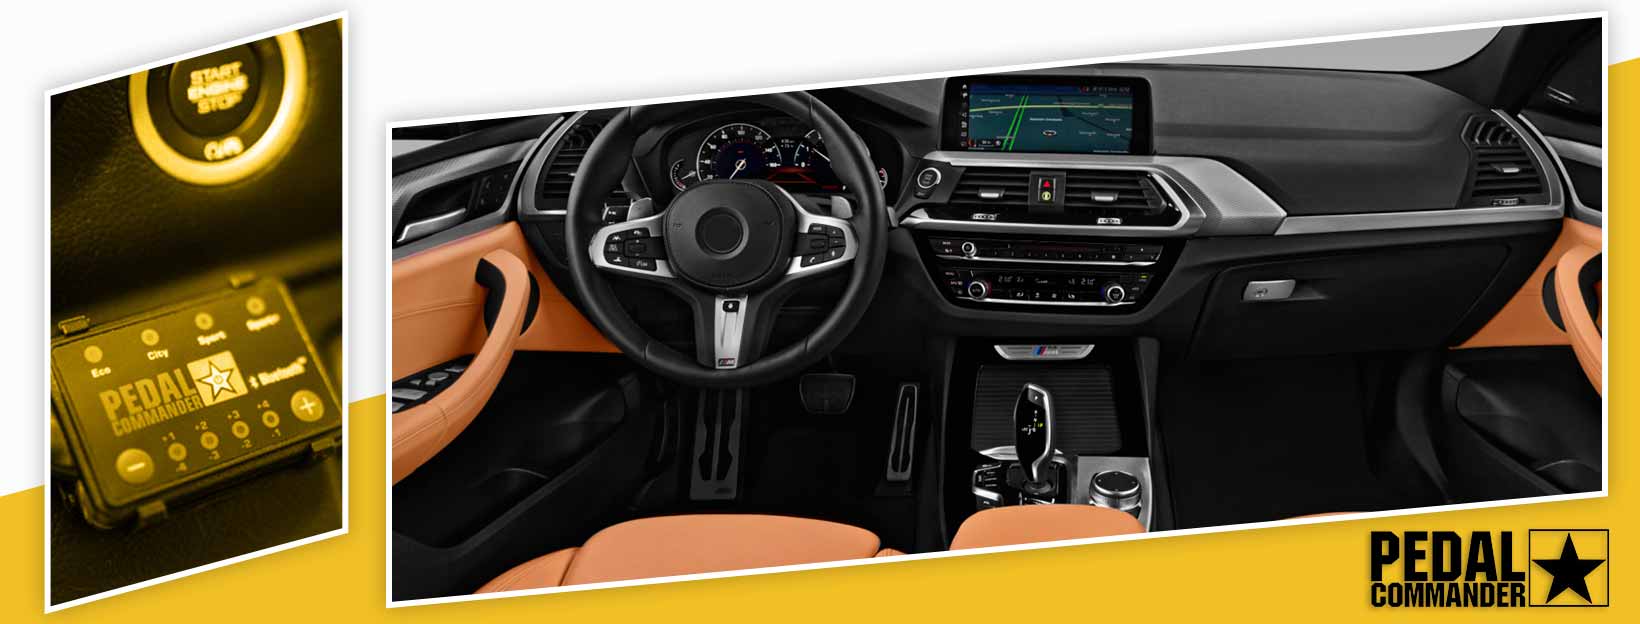 Pedal Commander for BMW X3 - interior